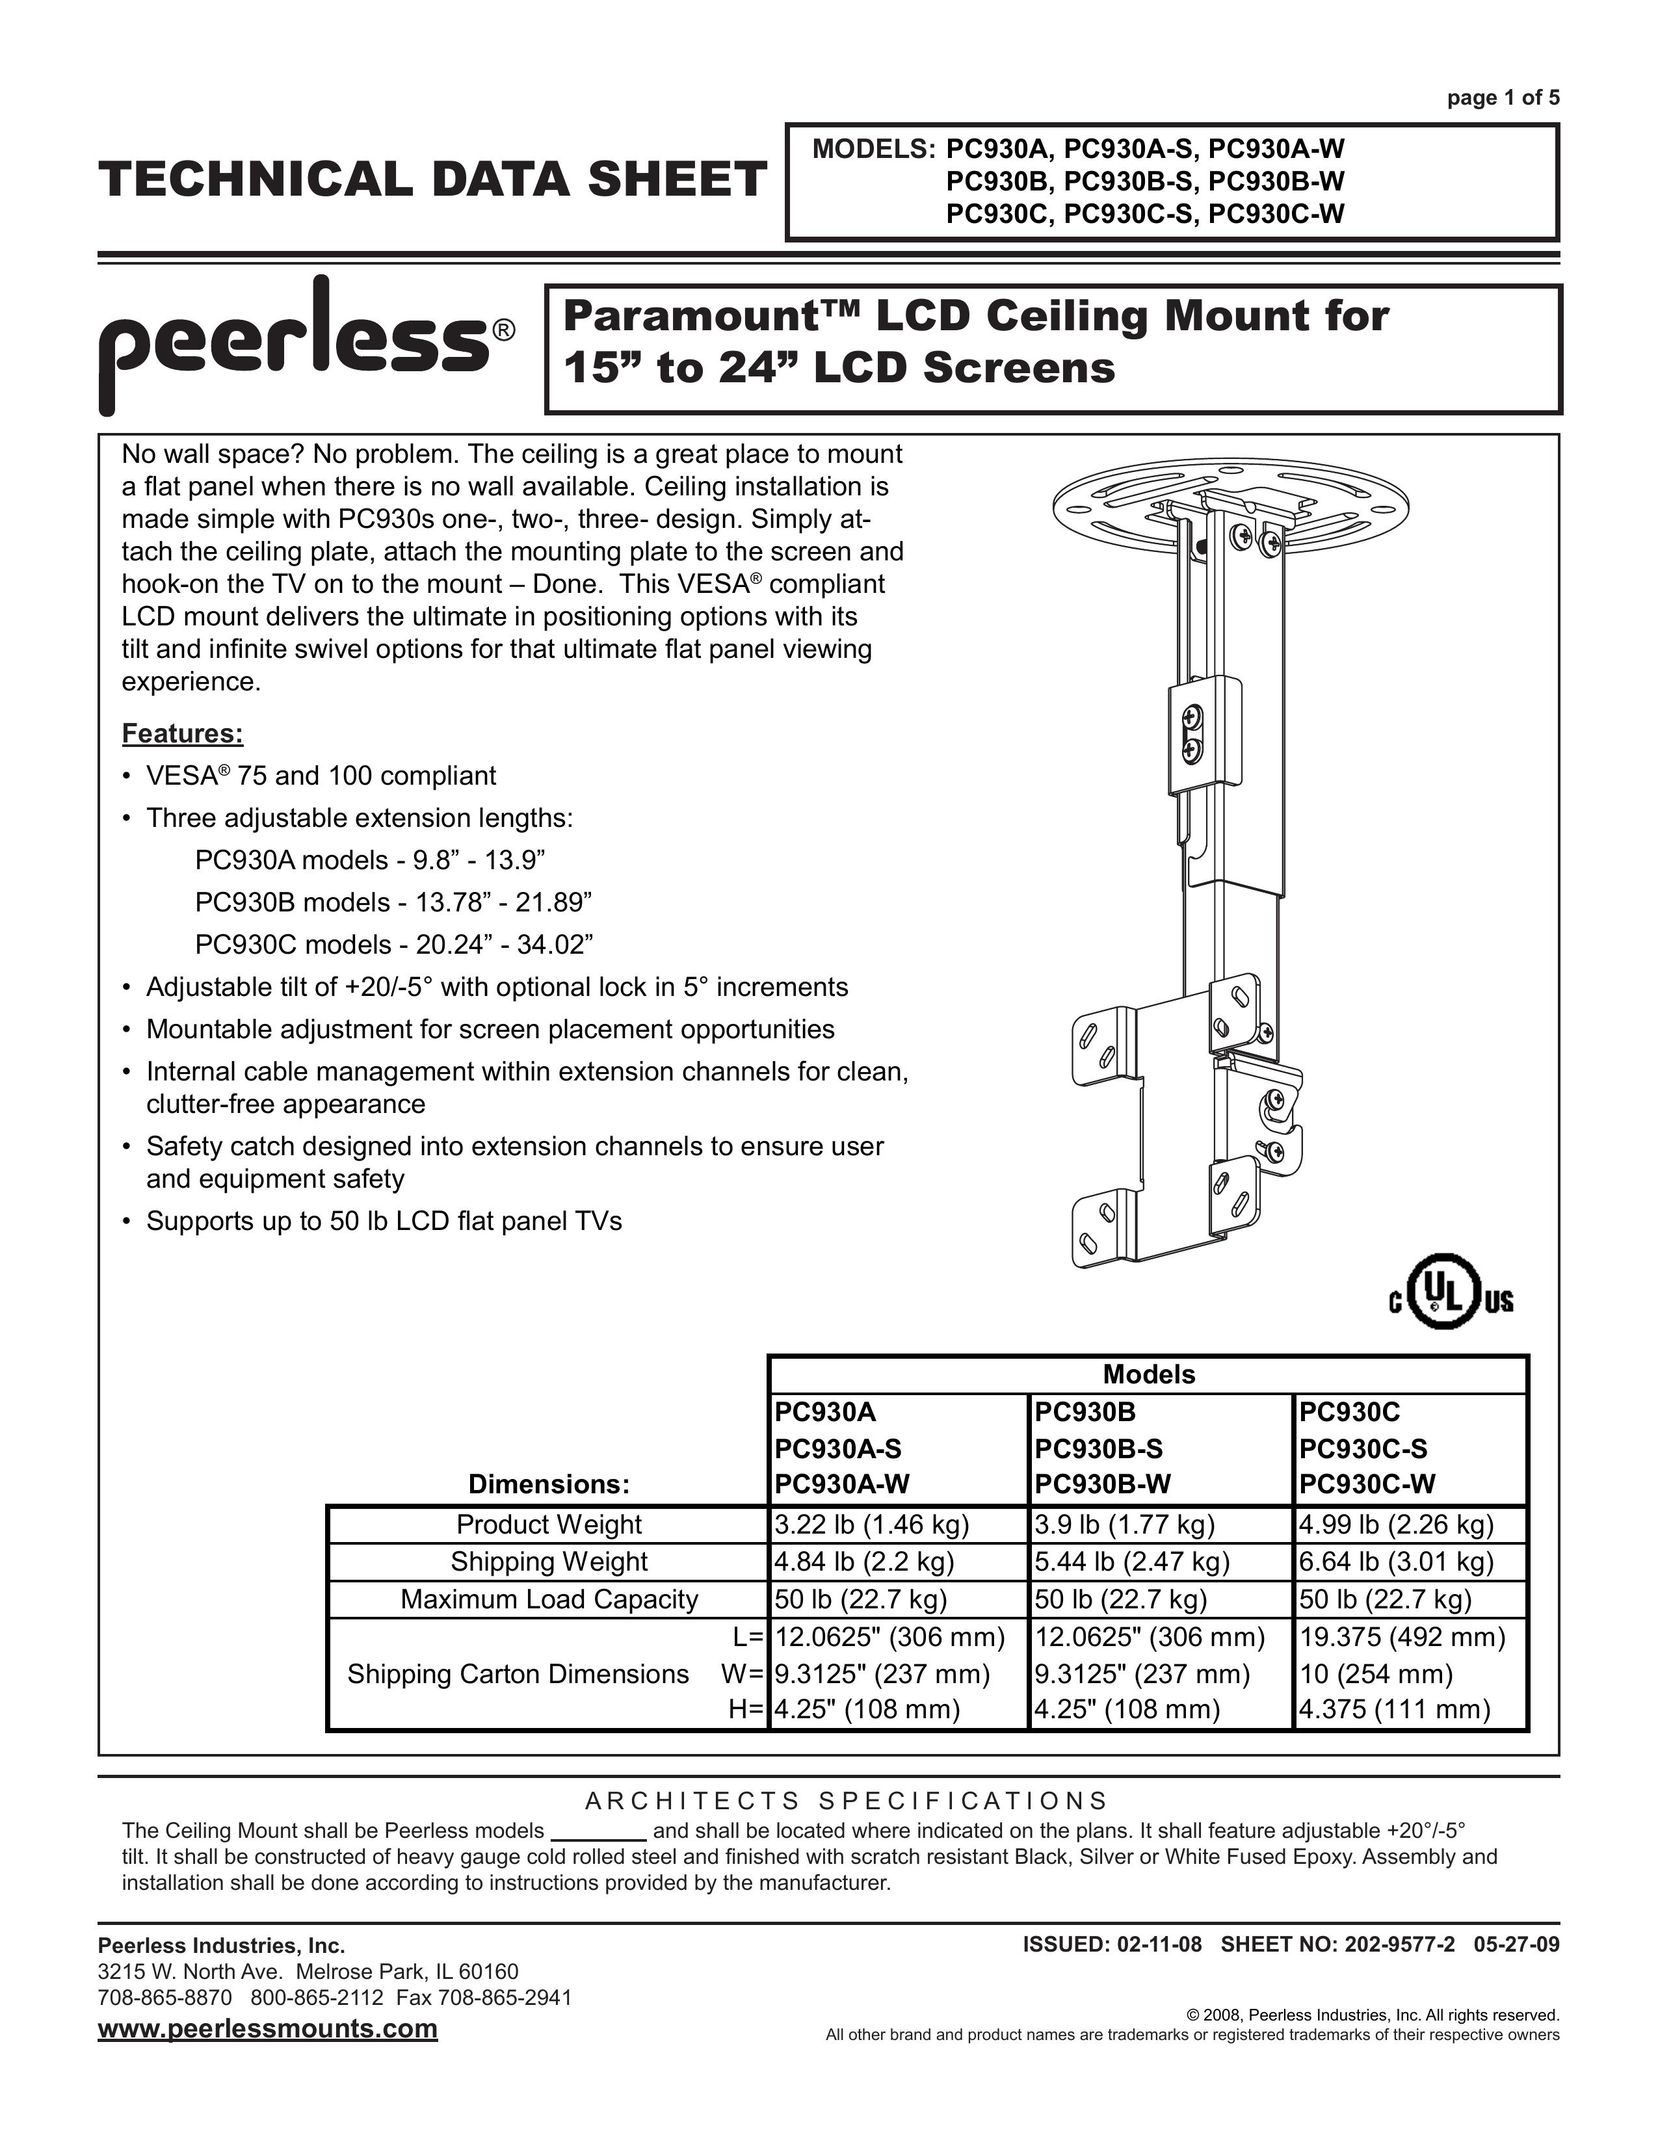 Peerless Industries PC930A-S TV Mount User Manual